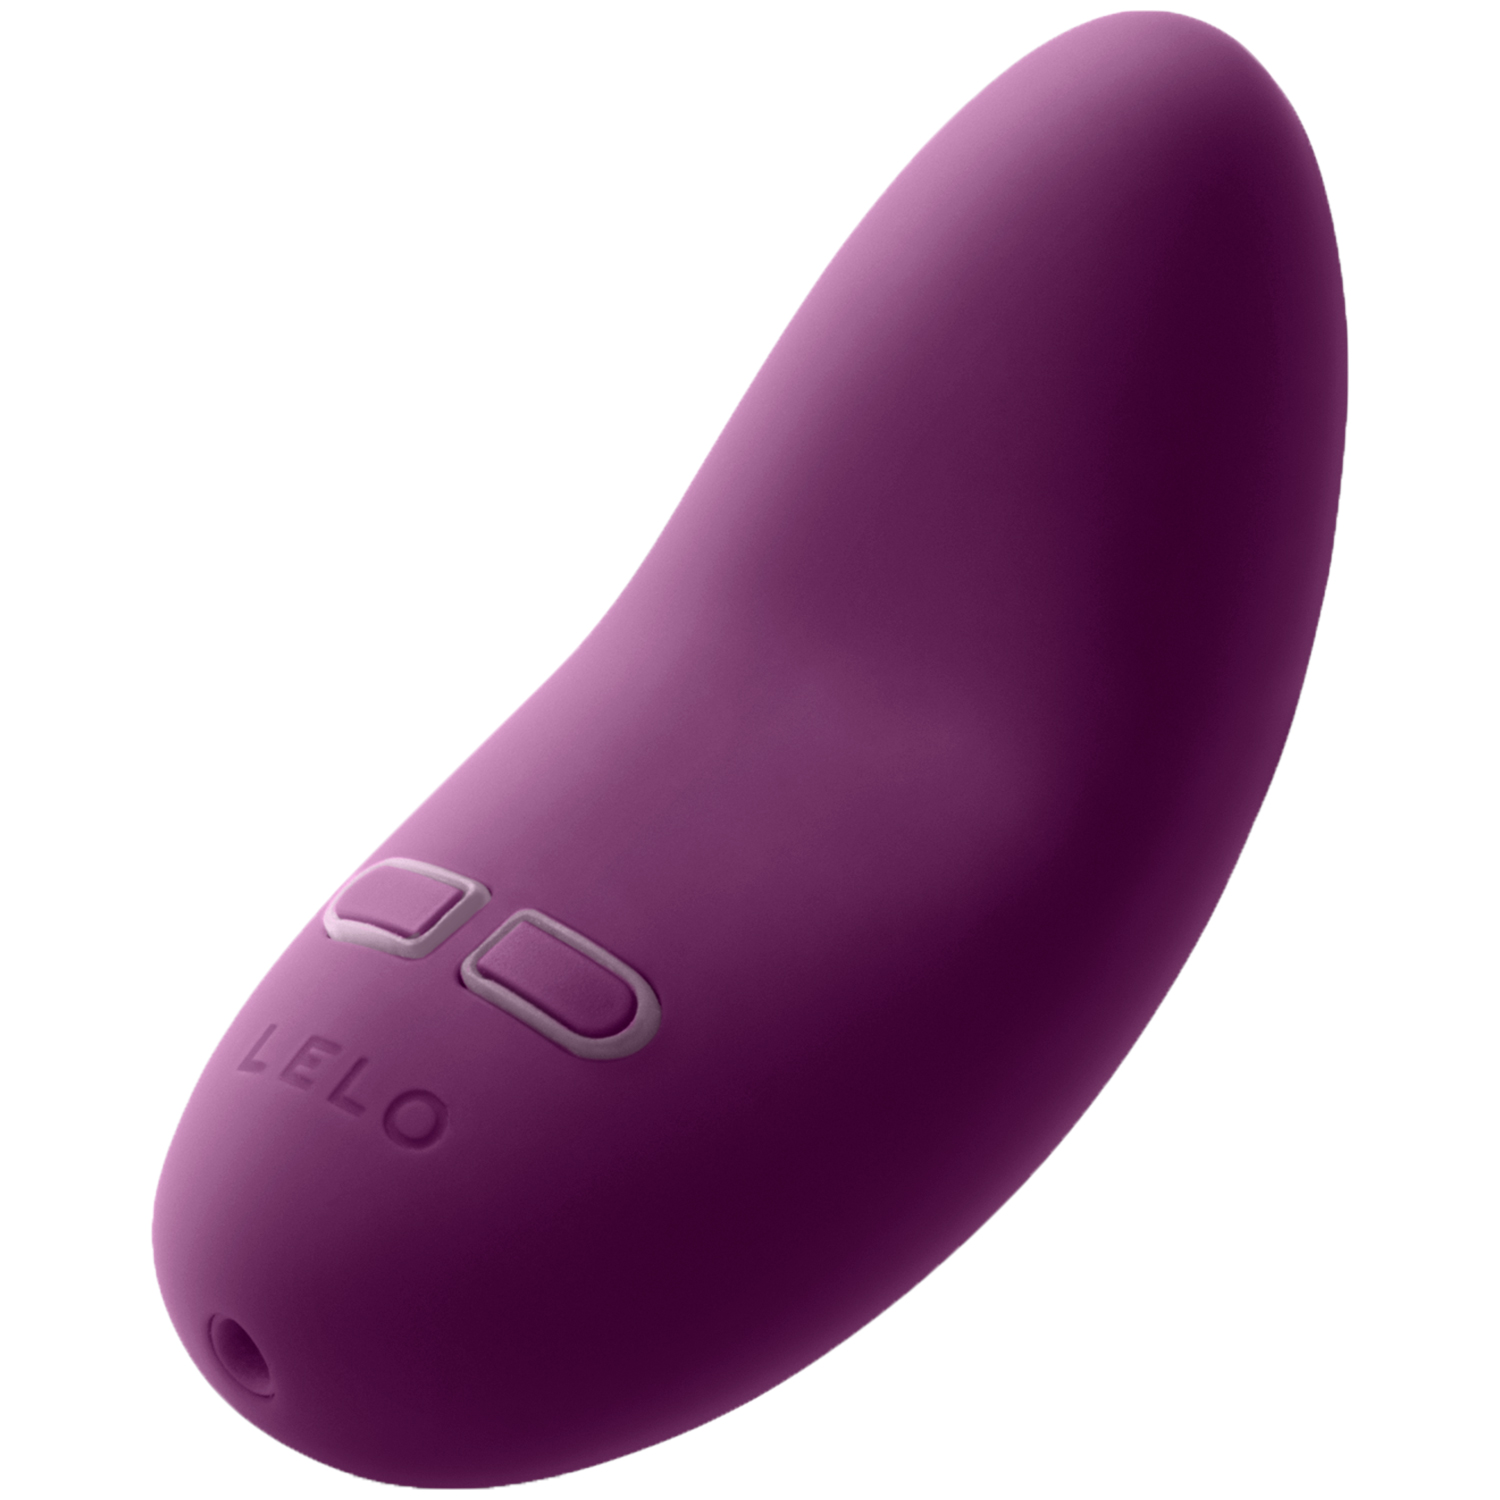 LELO LILY 2 Personal Massager - Purple